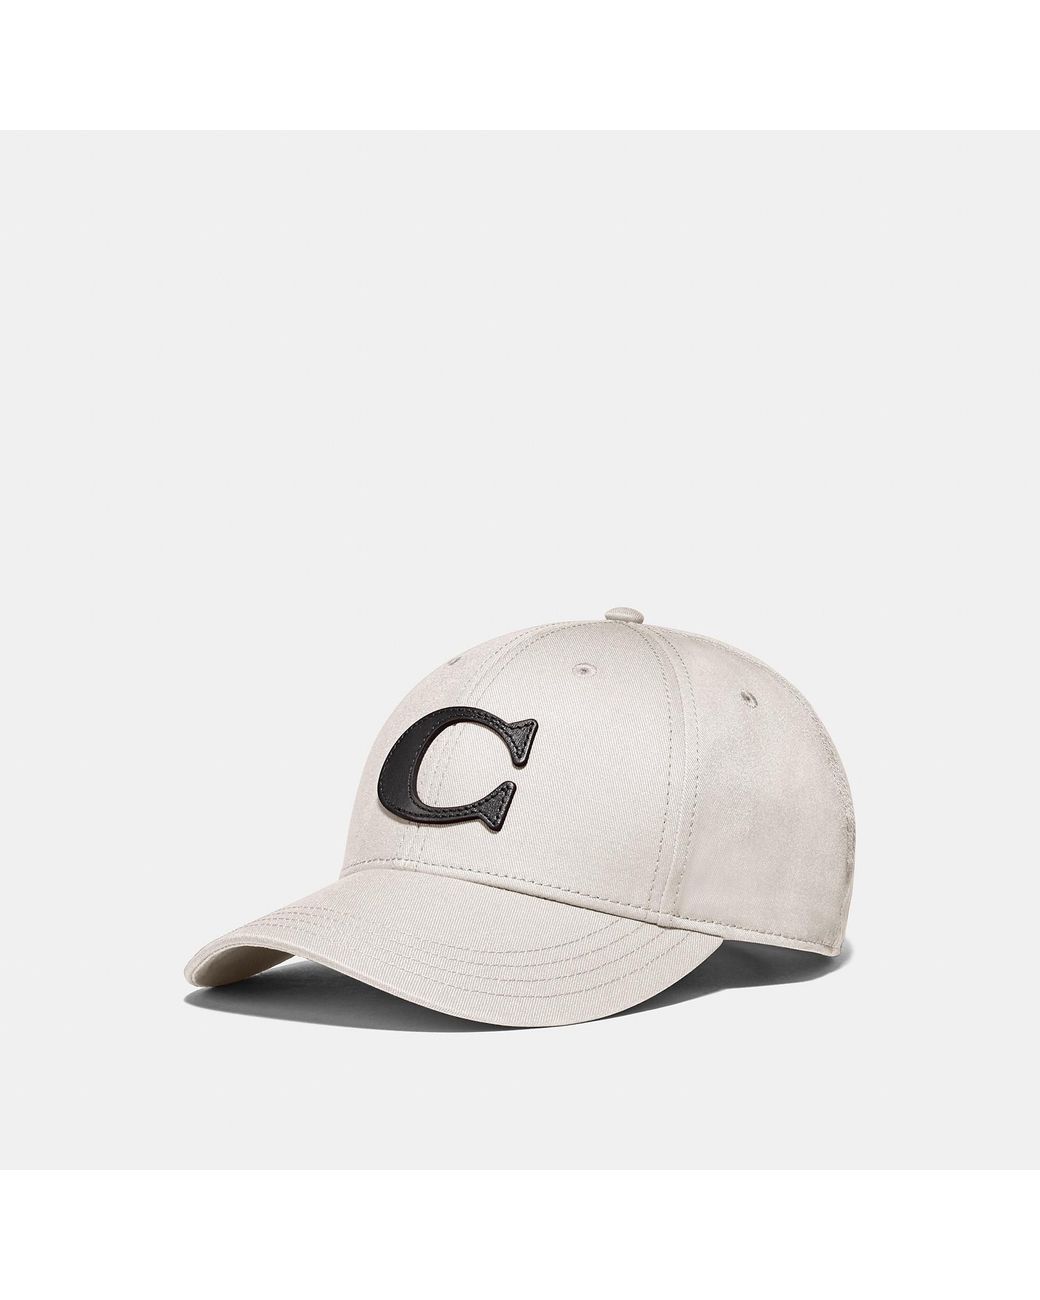 COACH Cotton Varsity C Cap in White for Men - Lyst